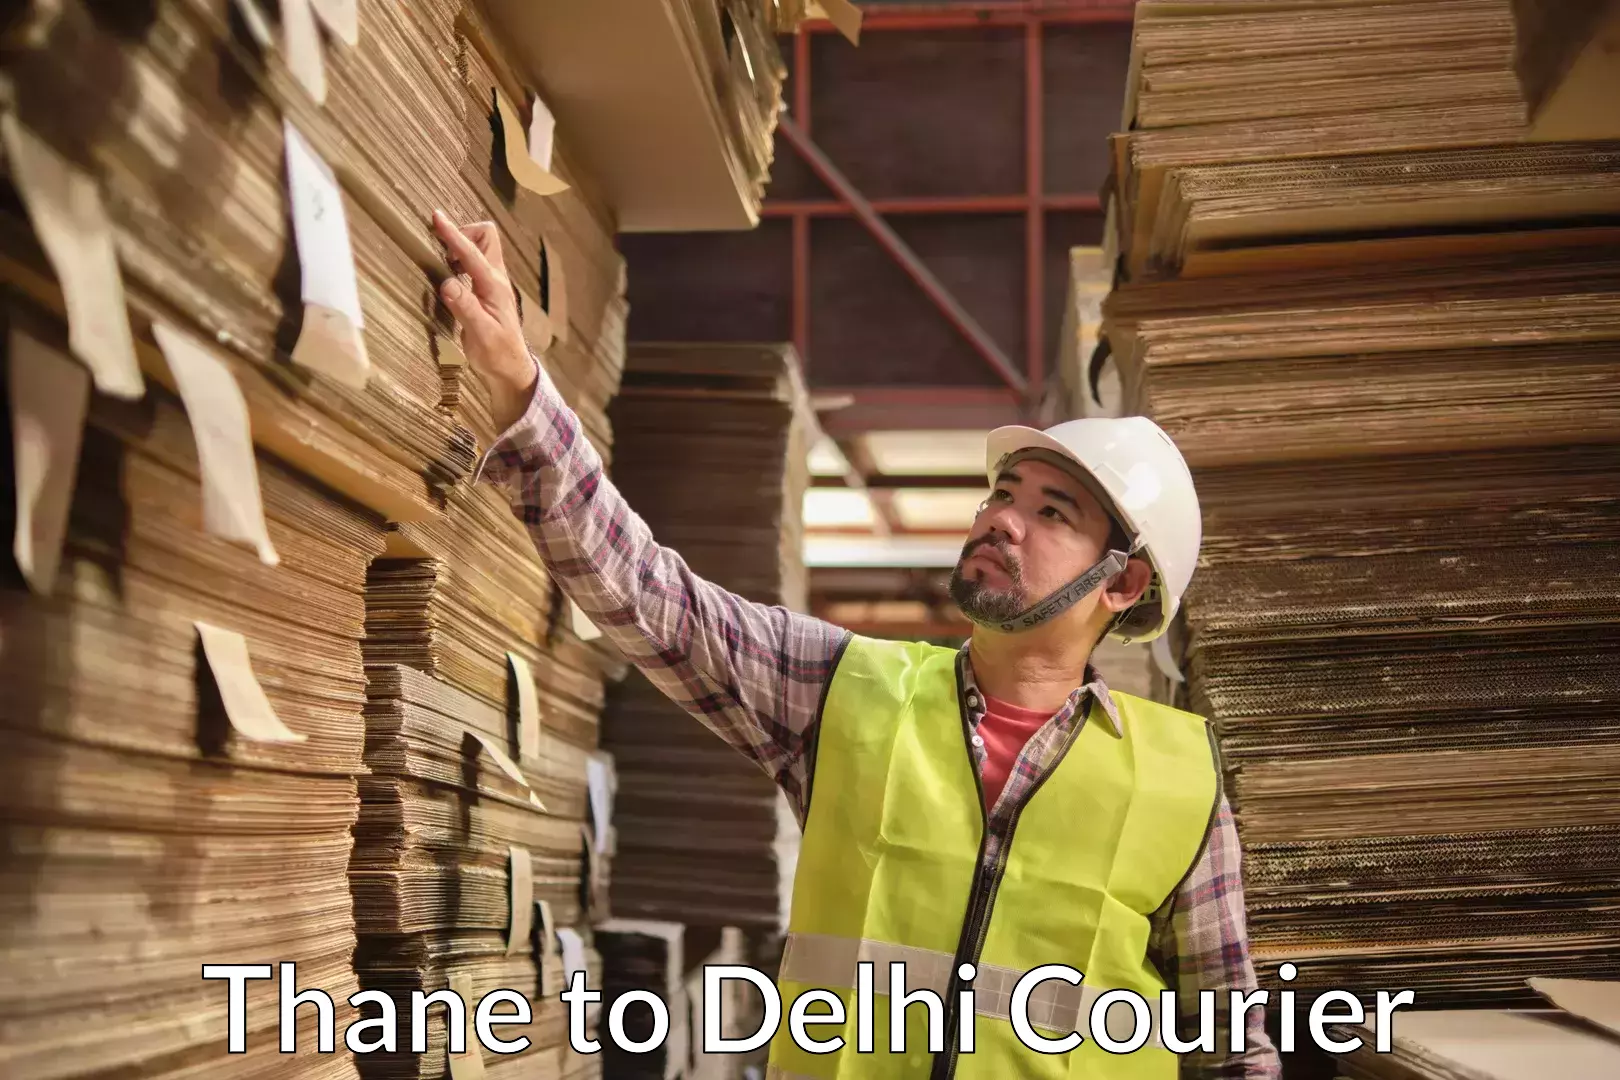 Furniture moving experts Thane to Delhi